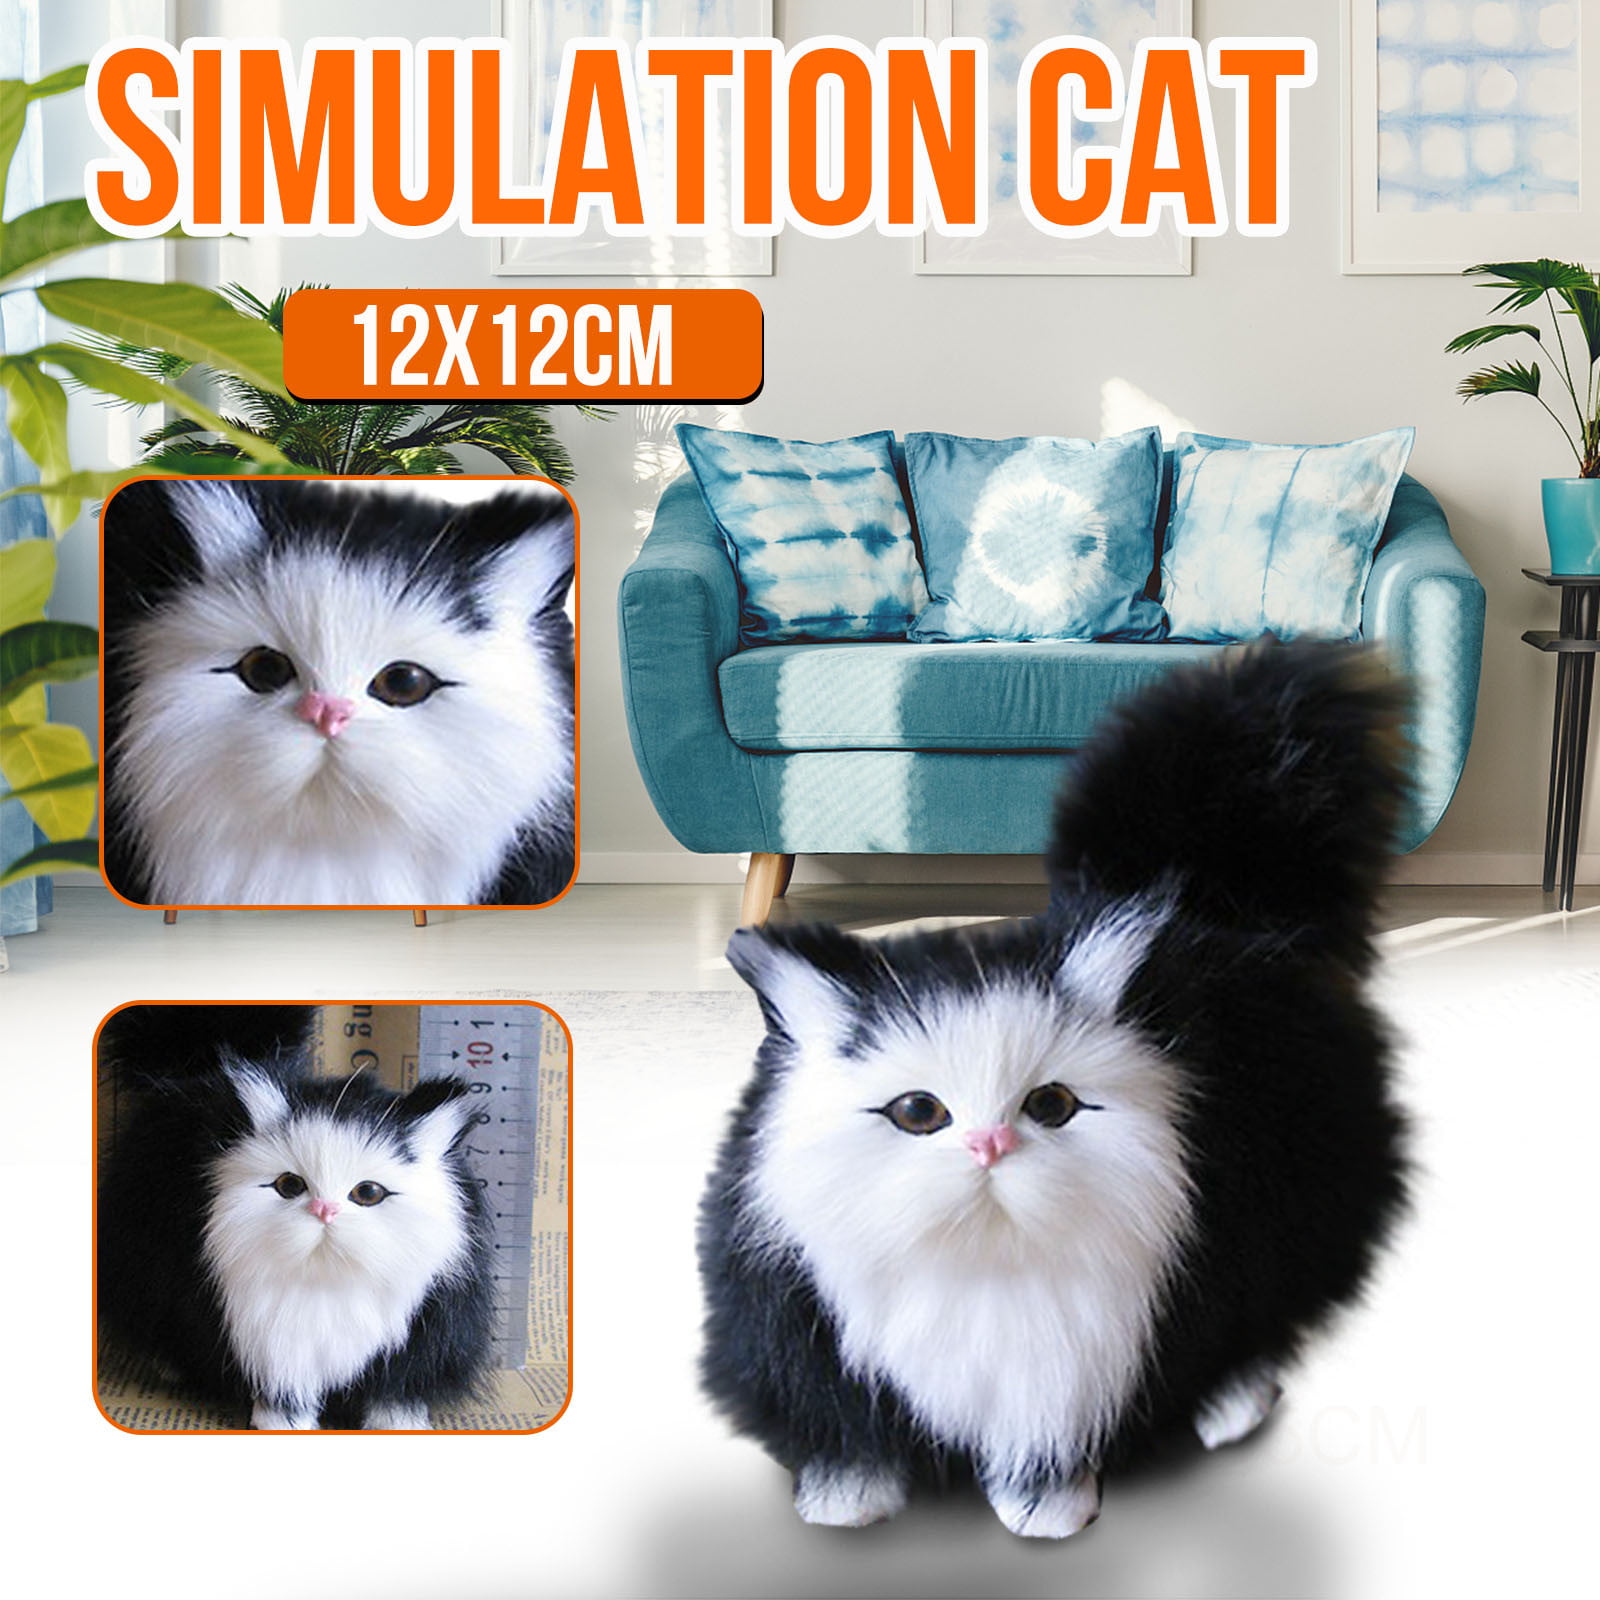 Details about   Simulation Cat Toys plush Toys Simulation Animal Models  Desktop Decoration 